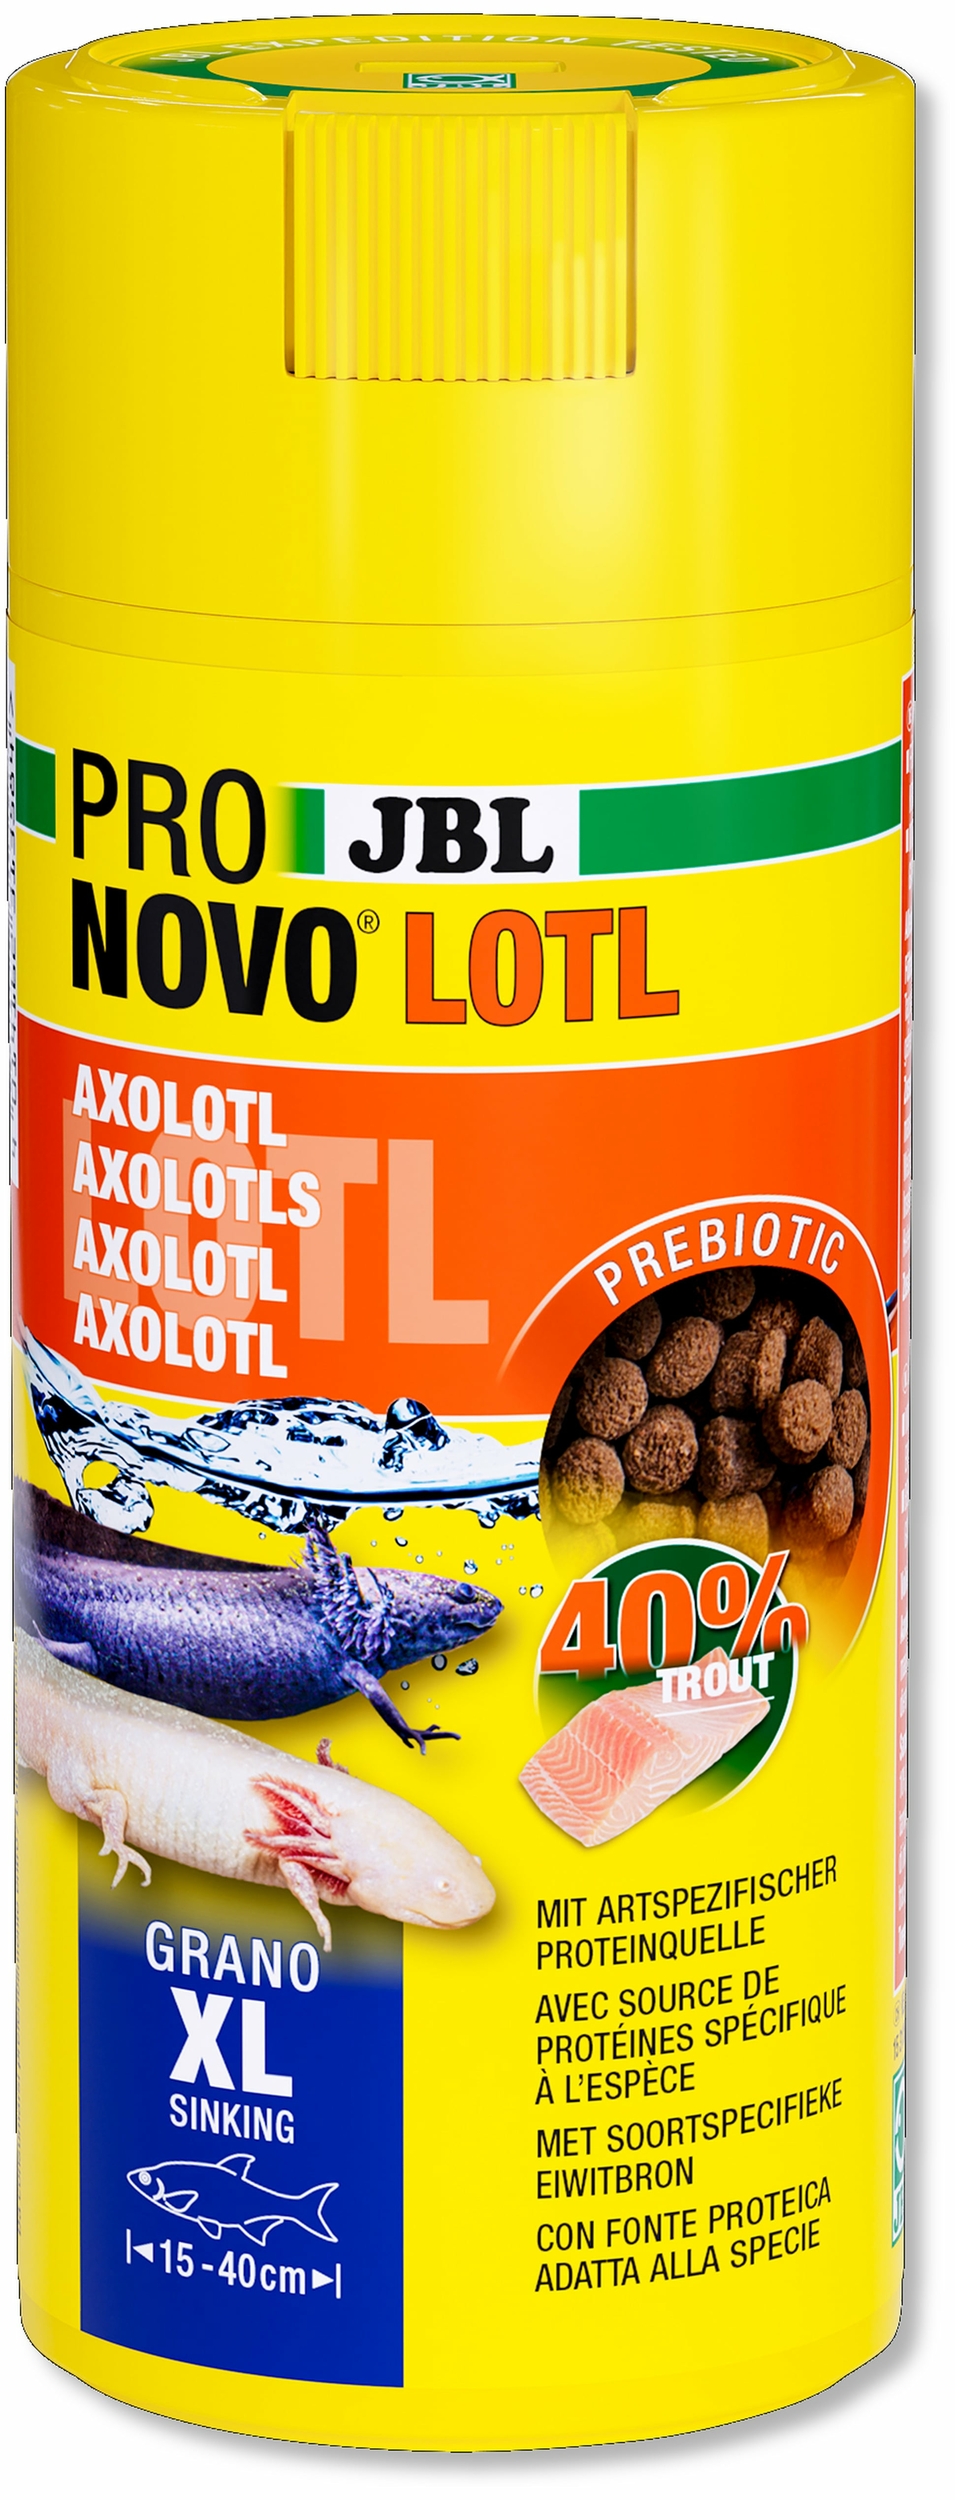 jbl-pronovo-lotl-grano-xl-250-ml-perles-alimentaires-submersibles-pour-axolotls-de-15-a-40-cm-min